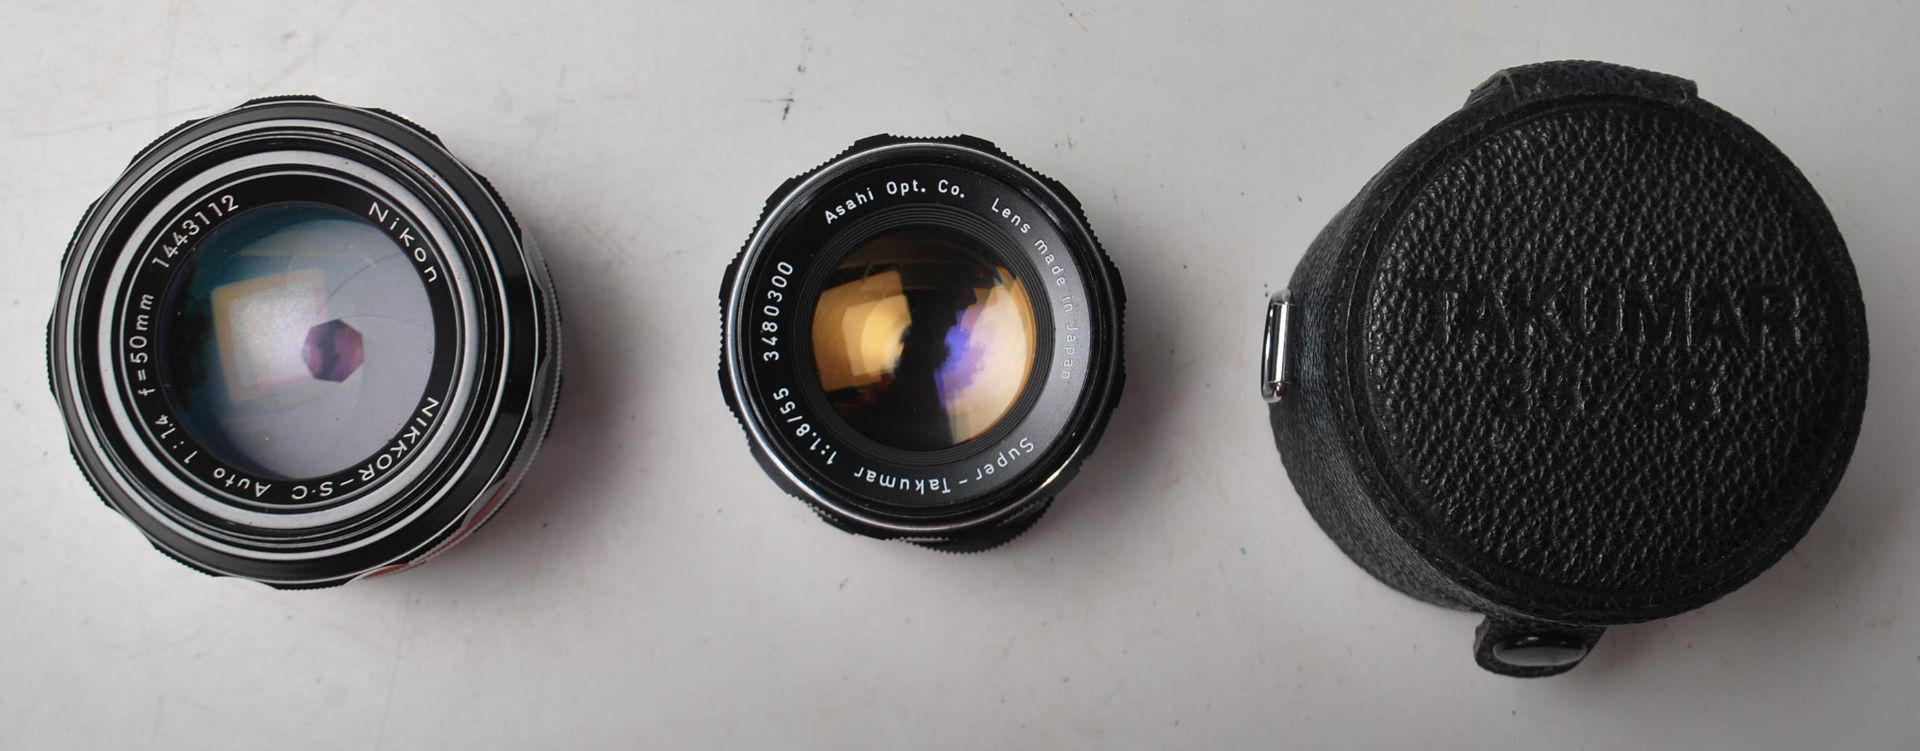 A vintage German Voigtländer camera along with spare lenses to include Nikkor S C auto 1:1.4 f= - Bild 7 aus 14